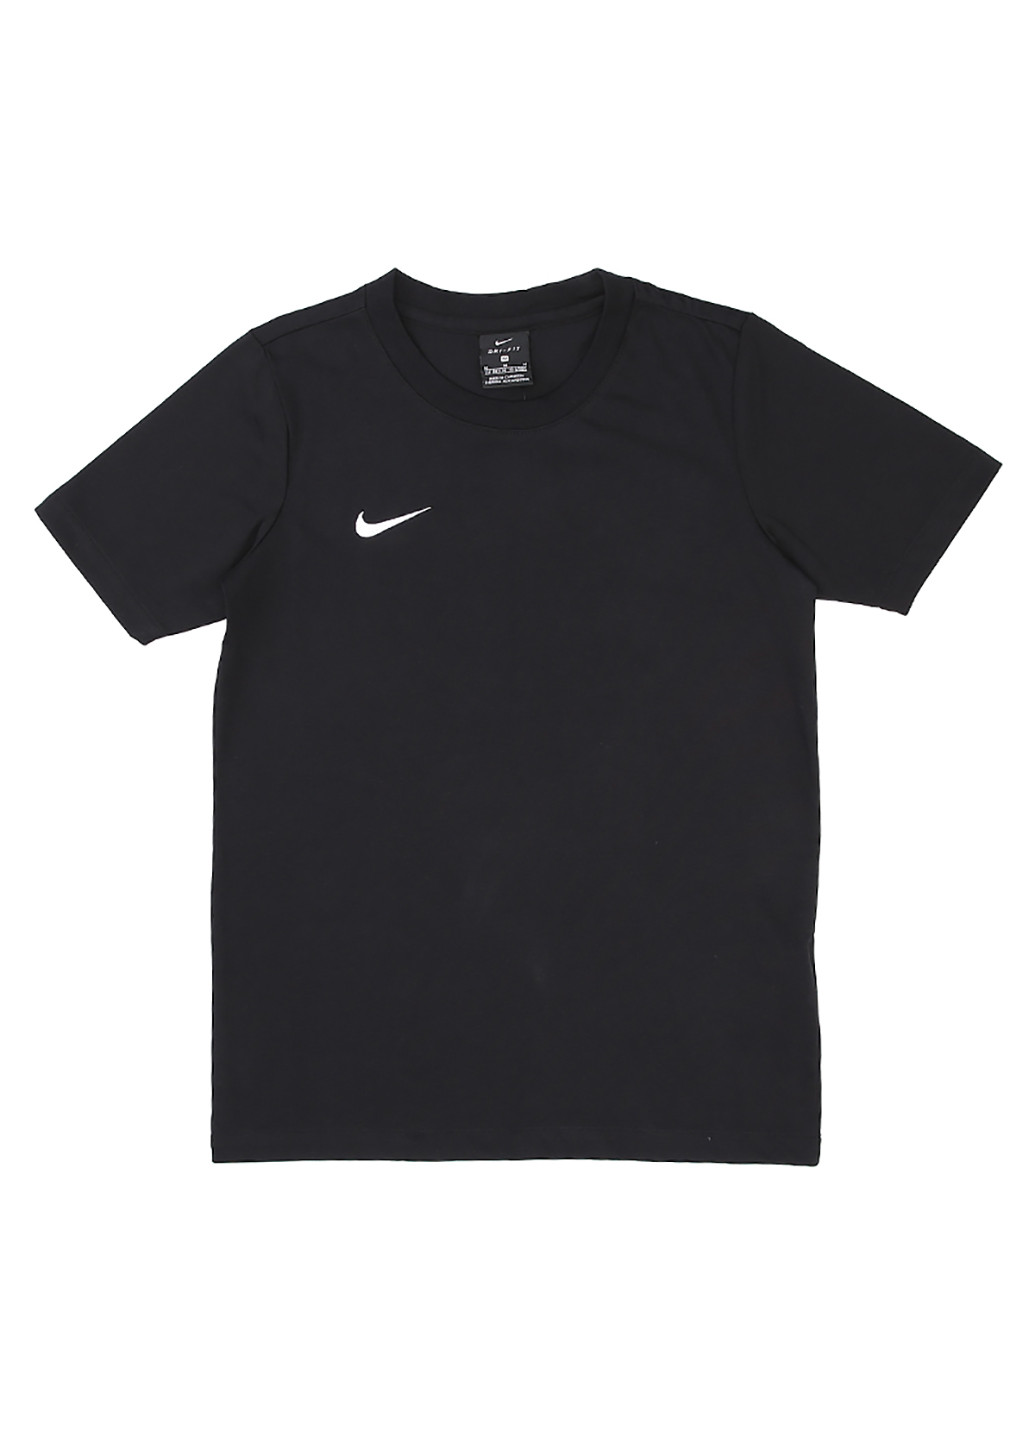 Черная демисезонная футболка Nike TEAM CLUB BLEND TEE JR